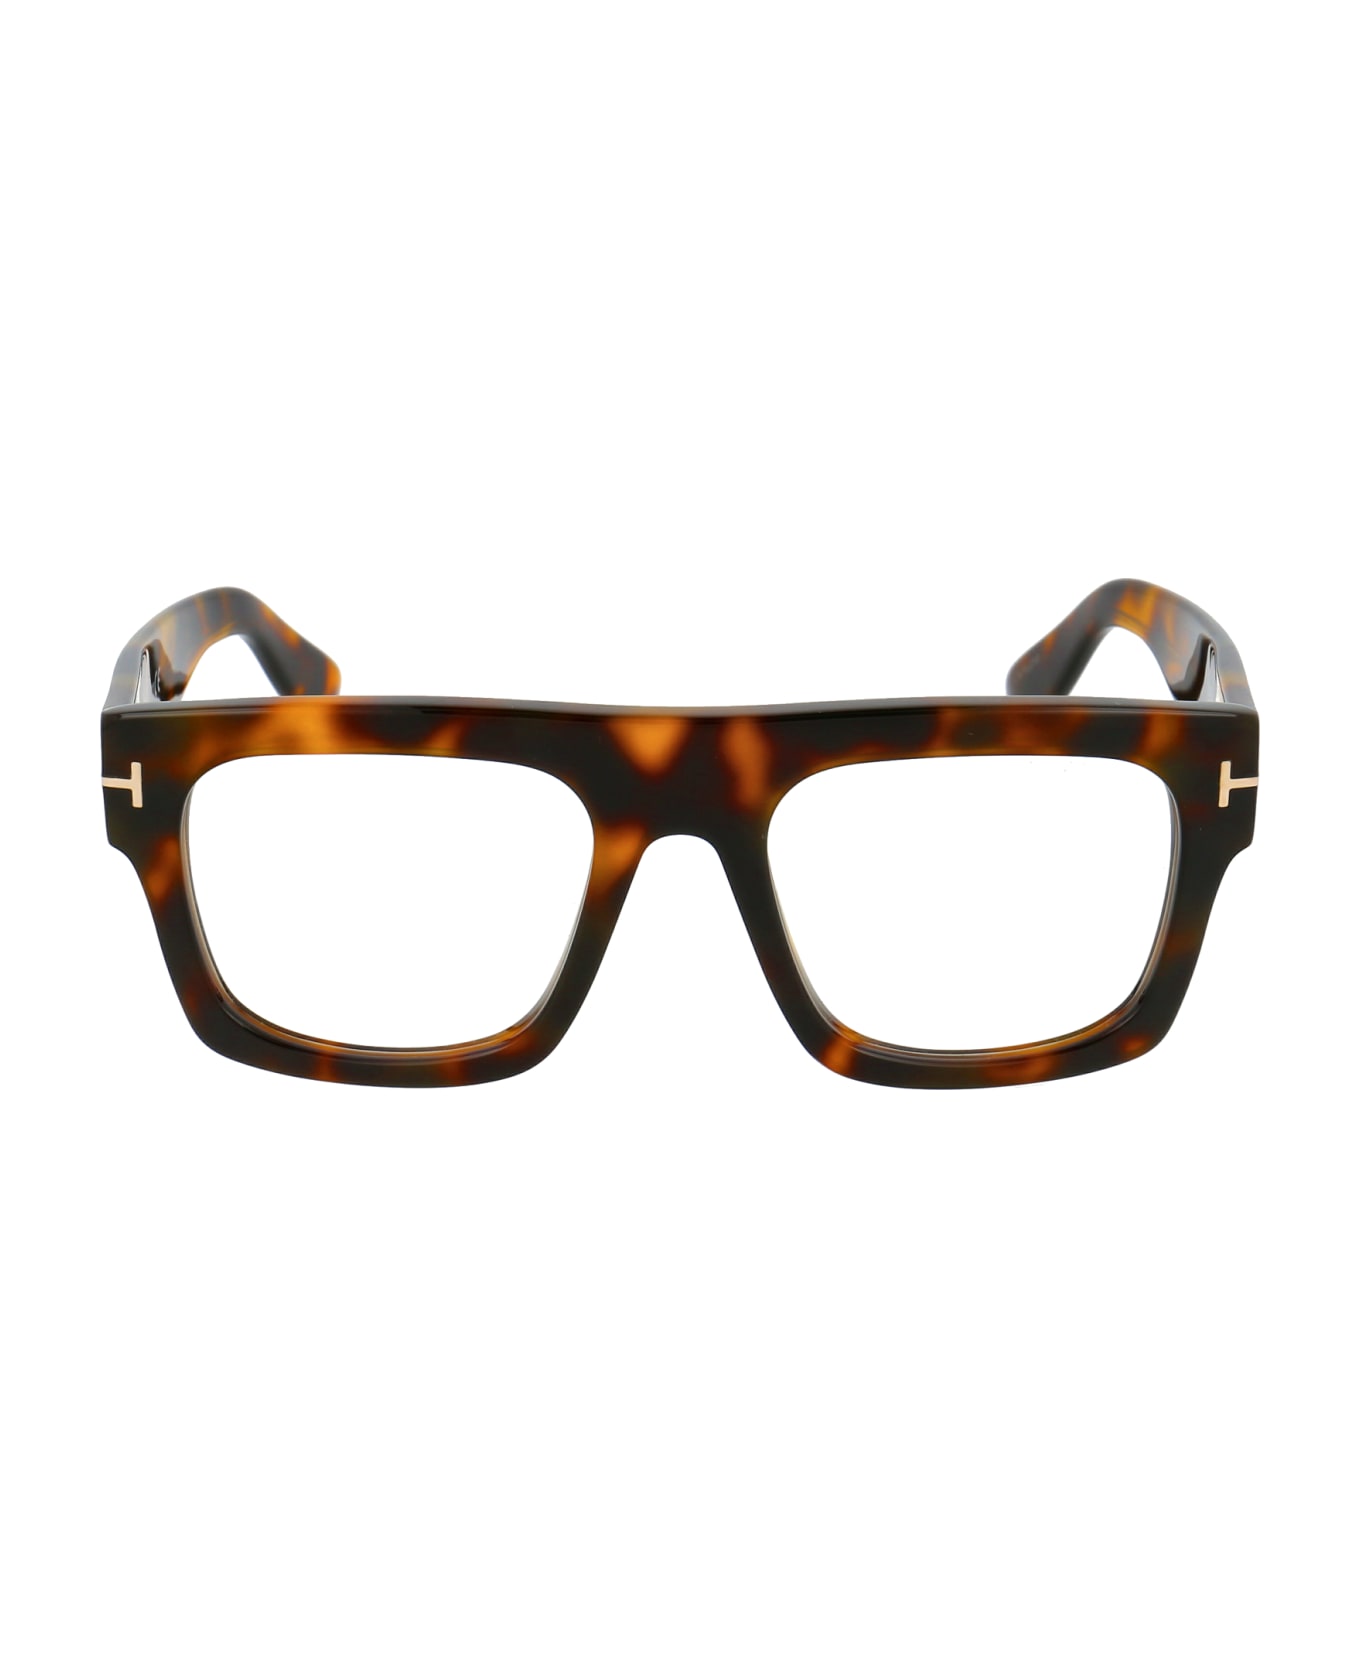 Tom Ford Eyewear Ft5634-b Glasses - 056 Avana/Altro アイウェア